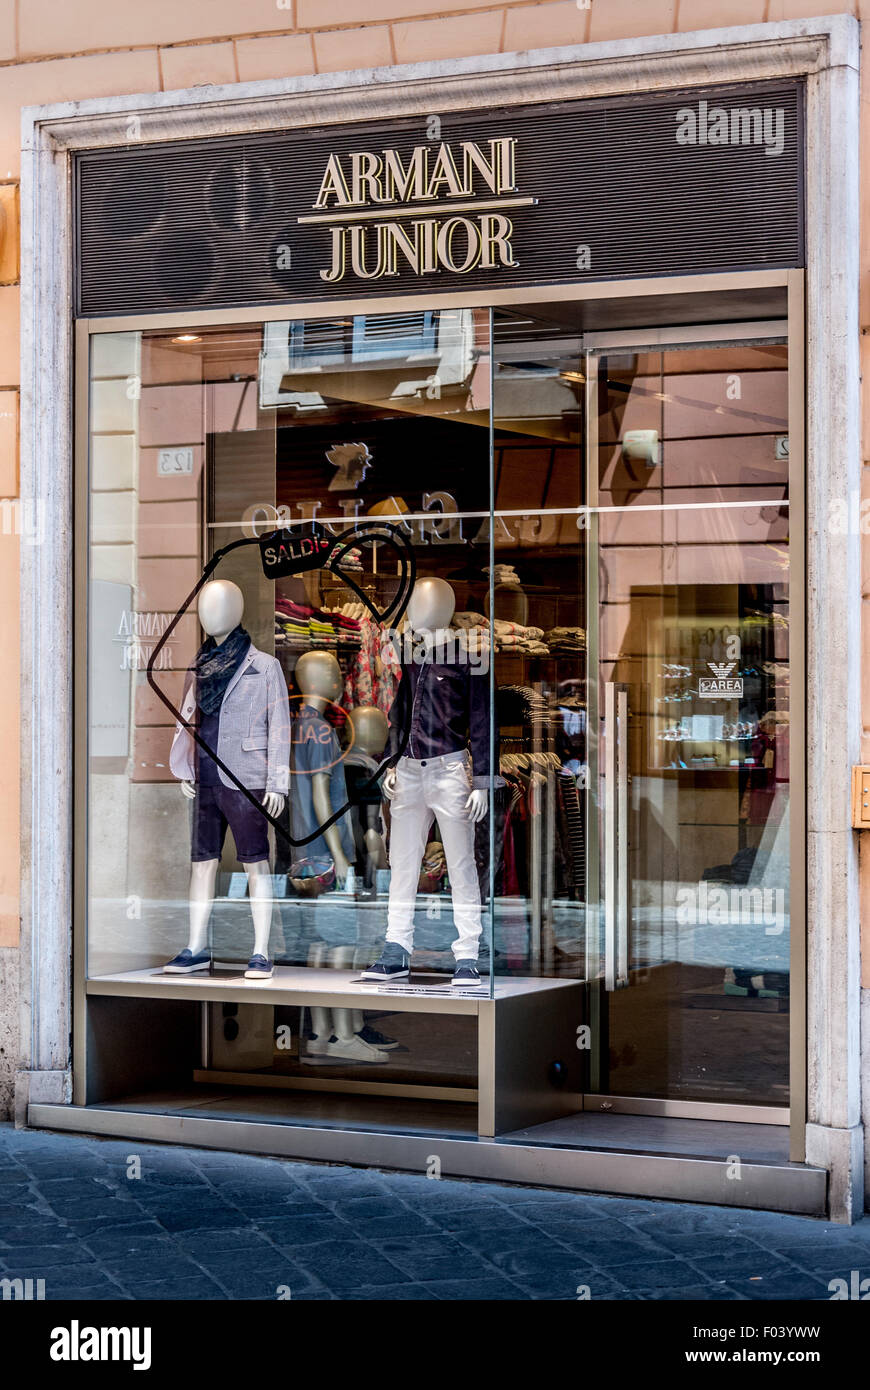 Shop exterior of Armani Junior. Rome Stock Photo - Alamy